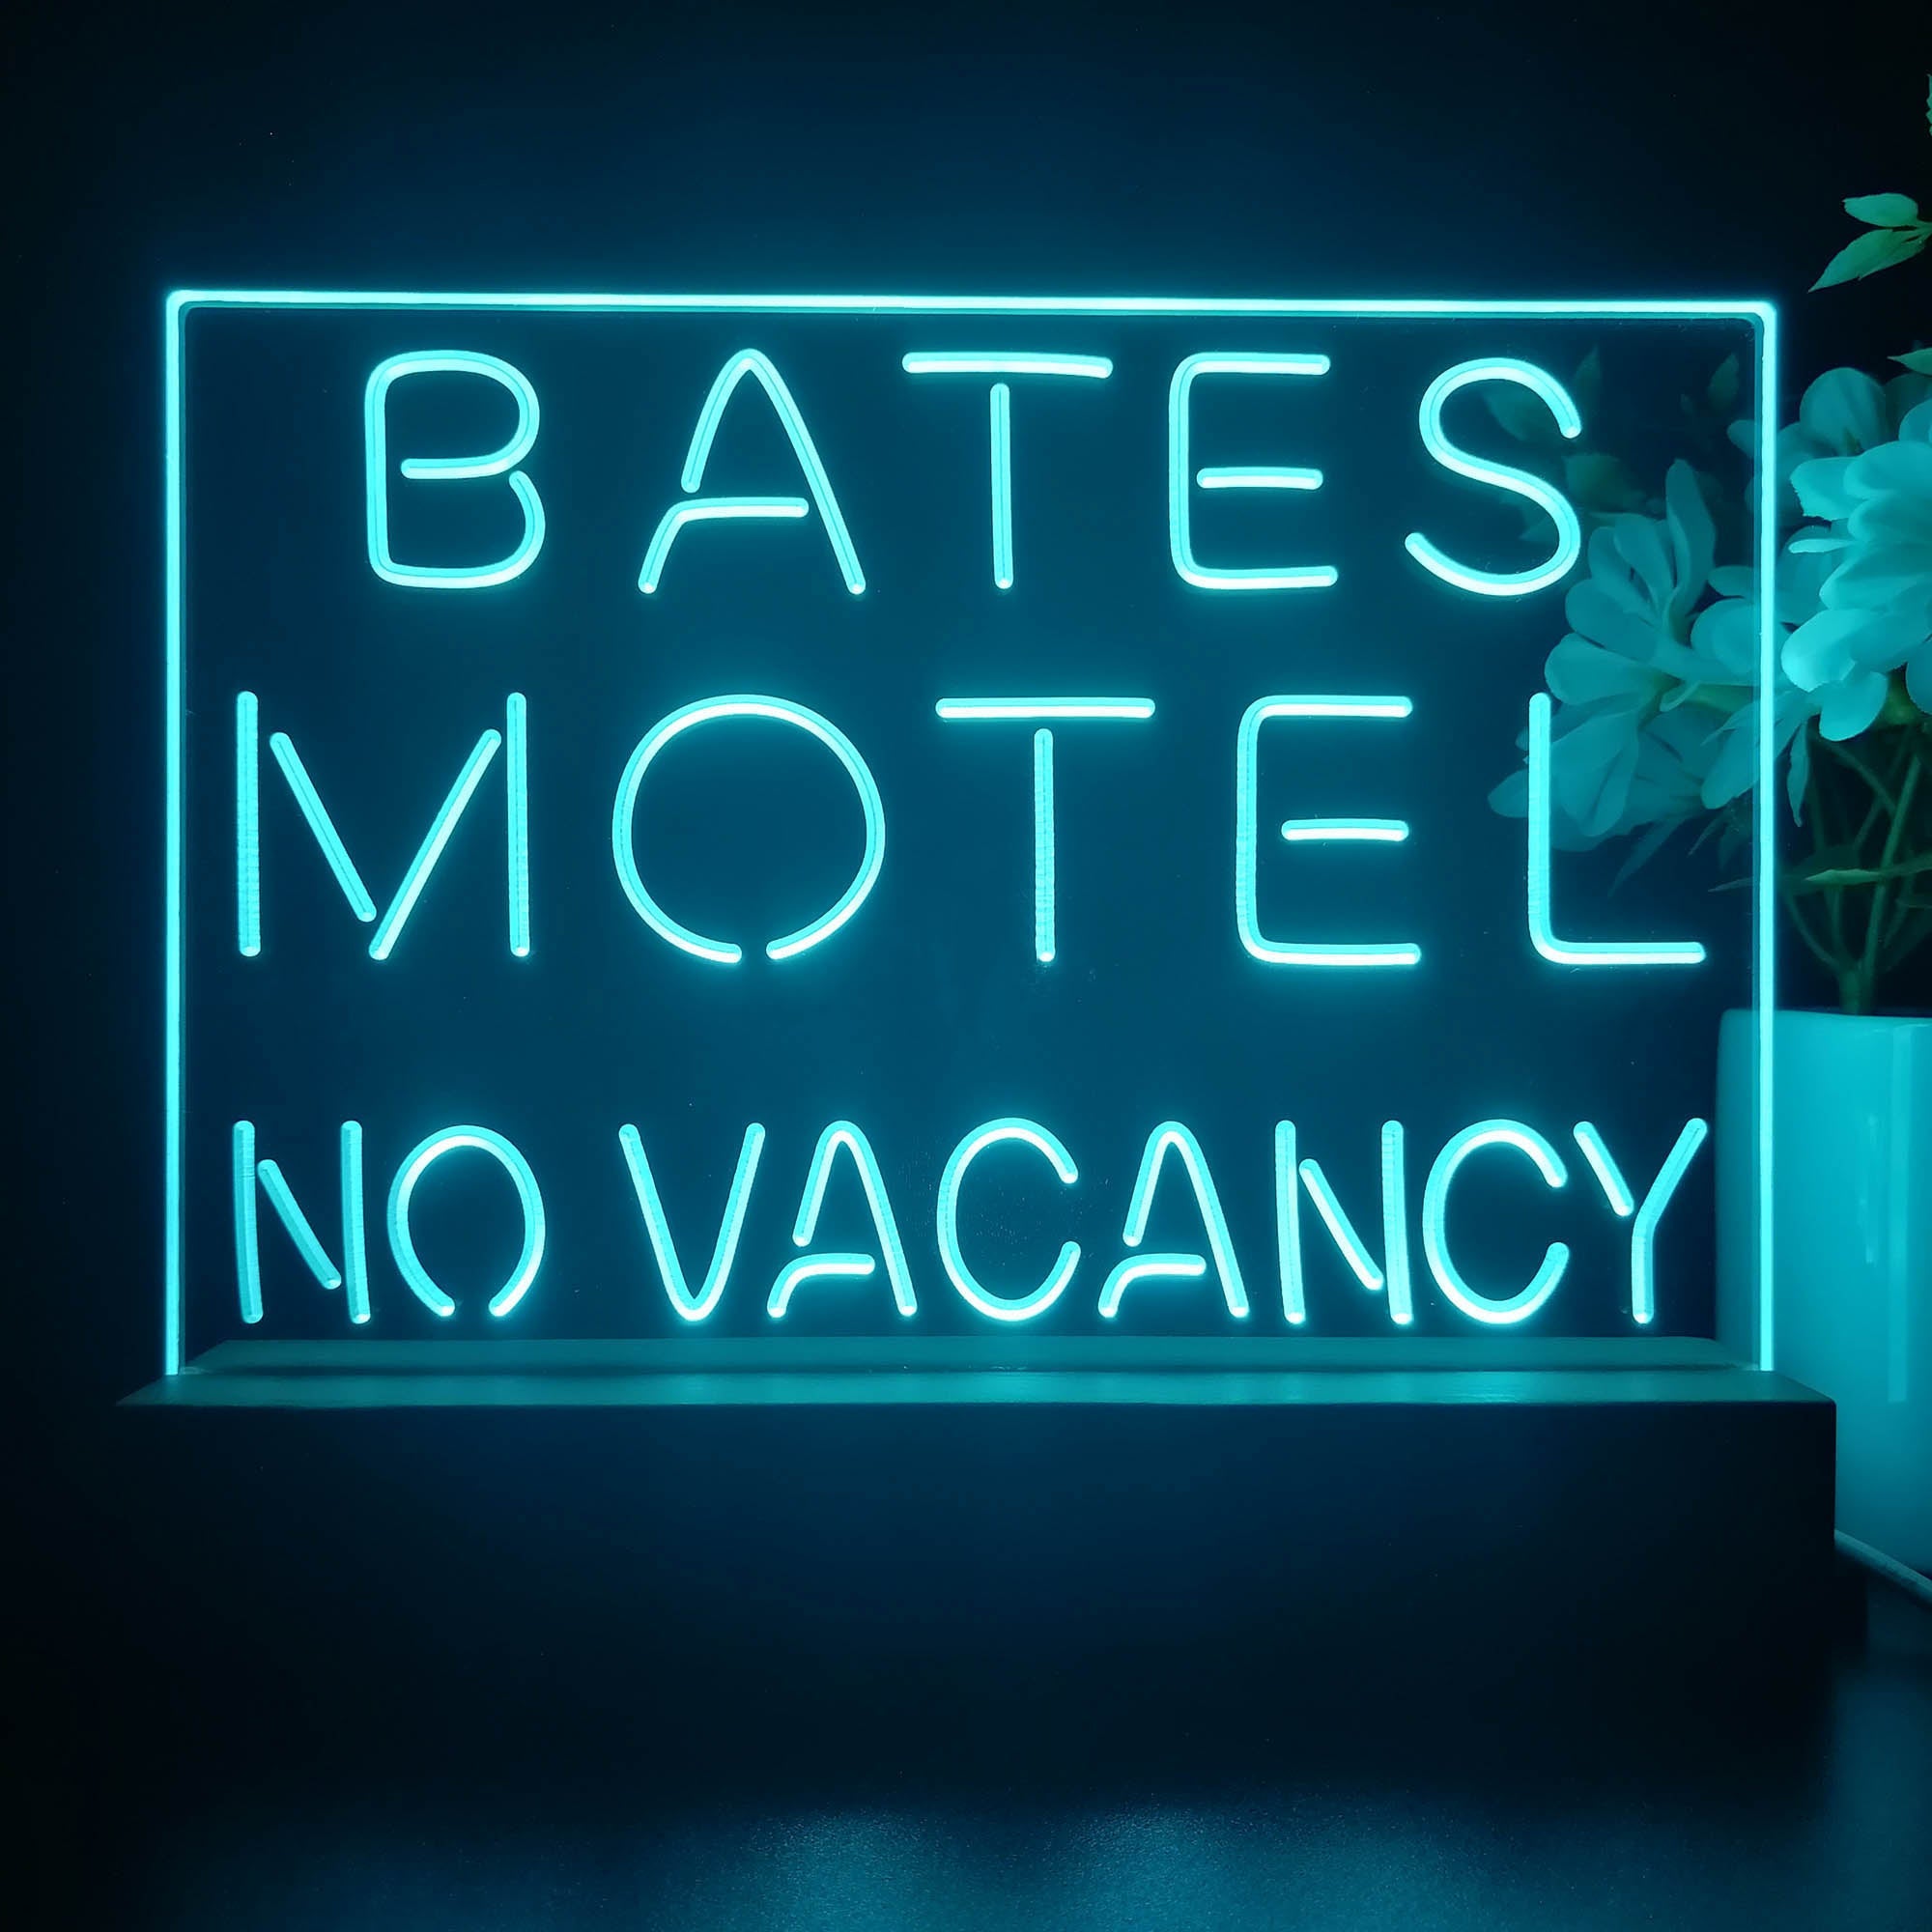 Bates Motel No Vacancy 3D Illusion Night Light Desk Lamp